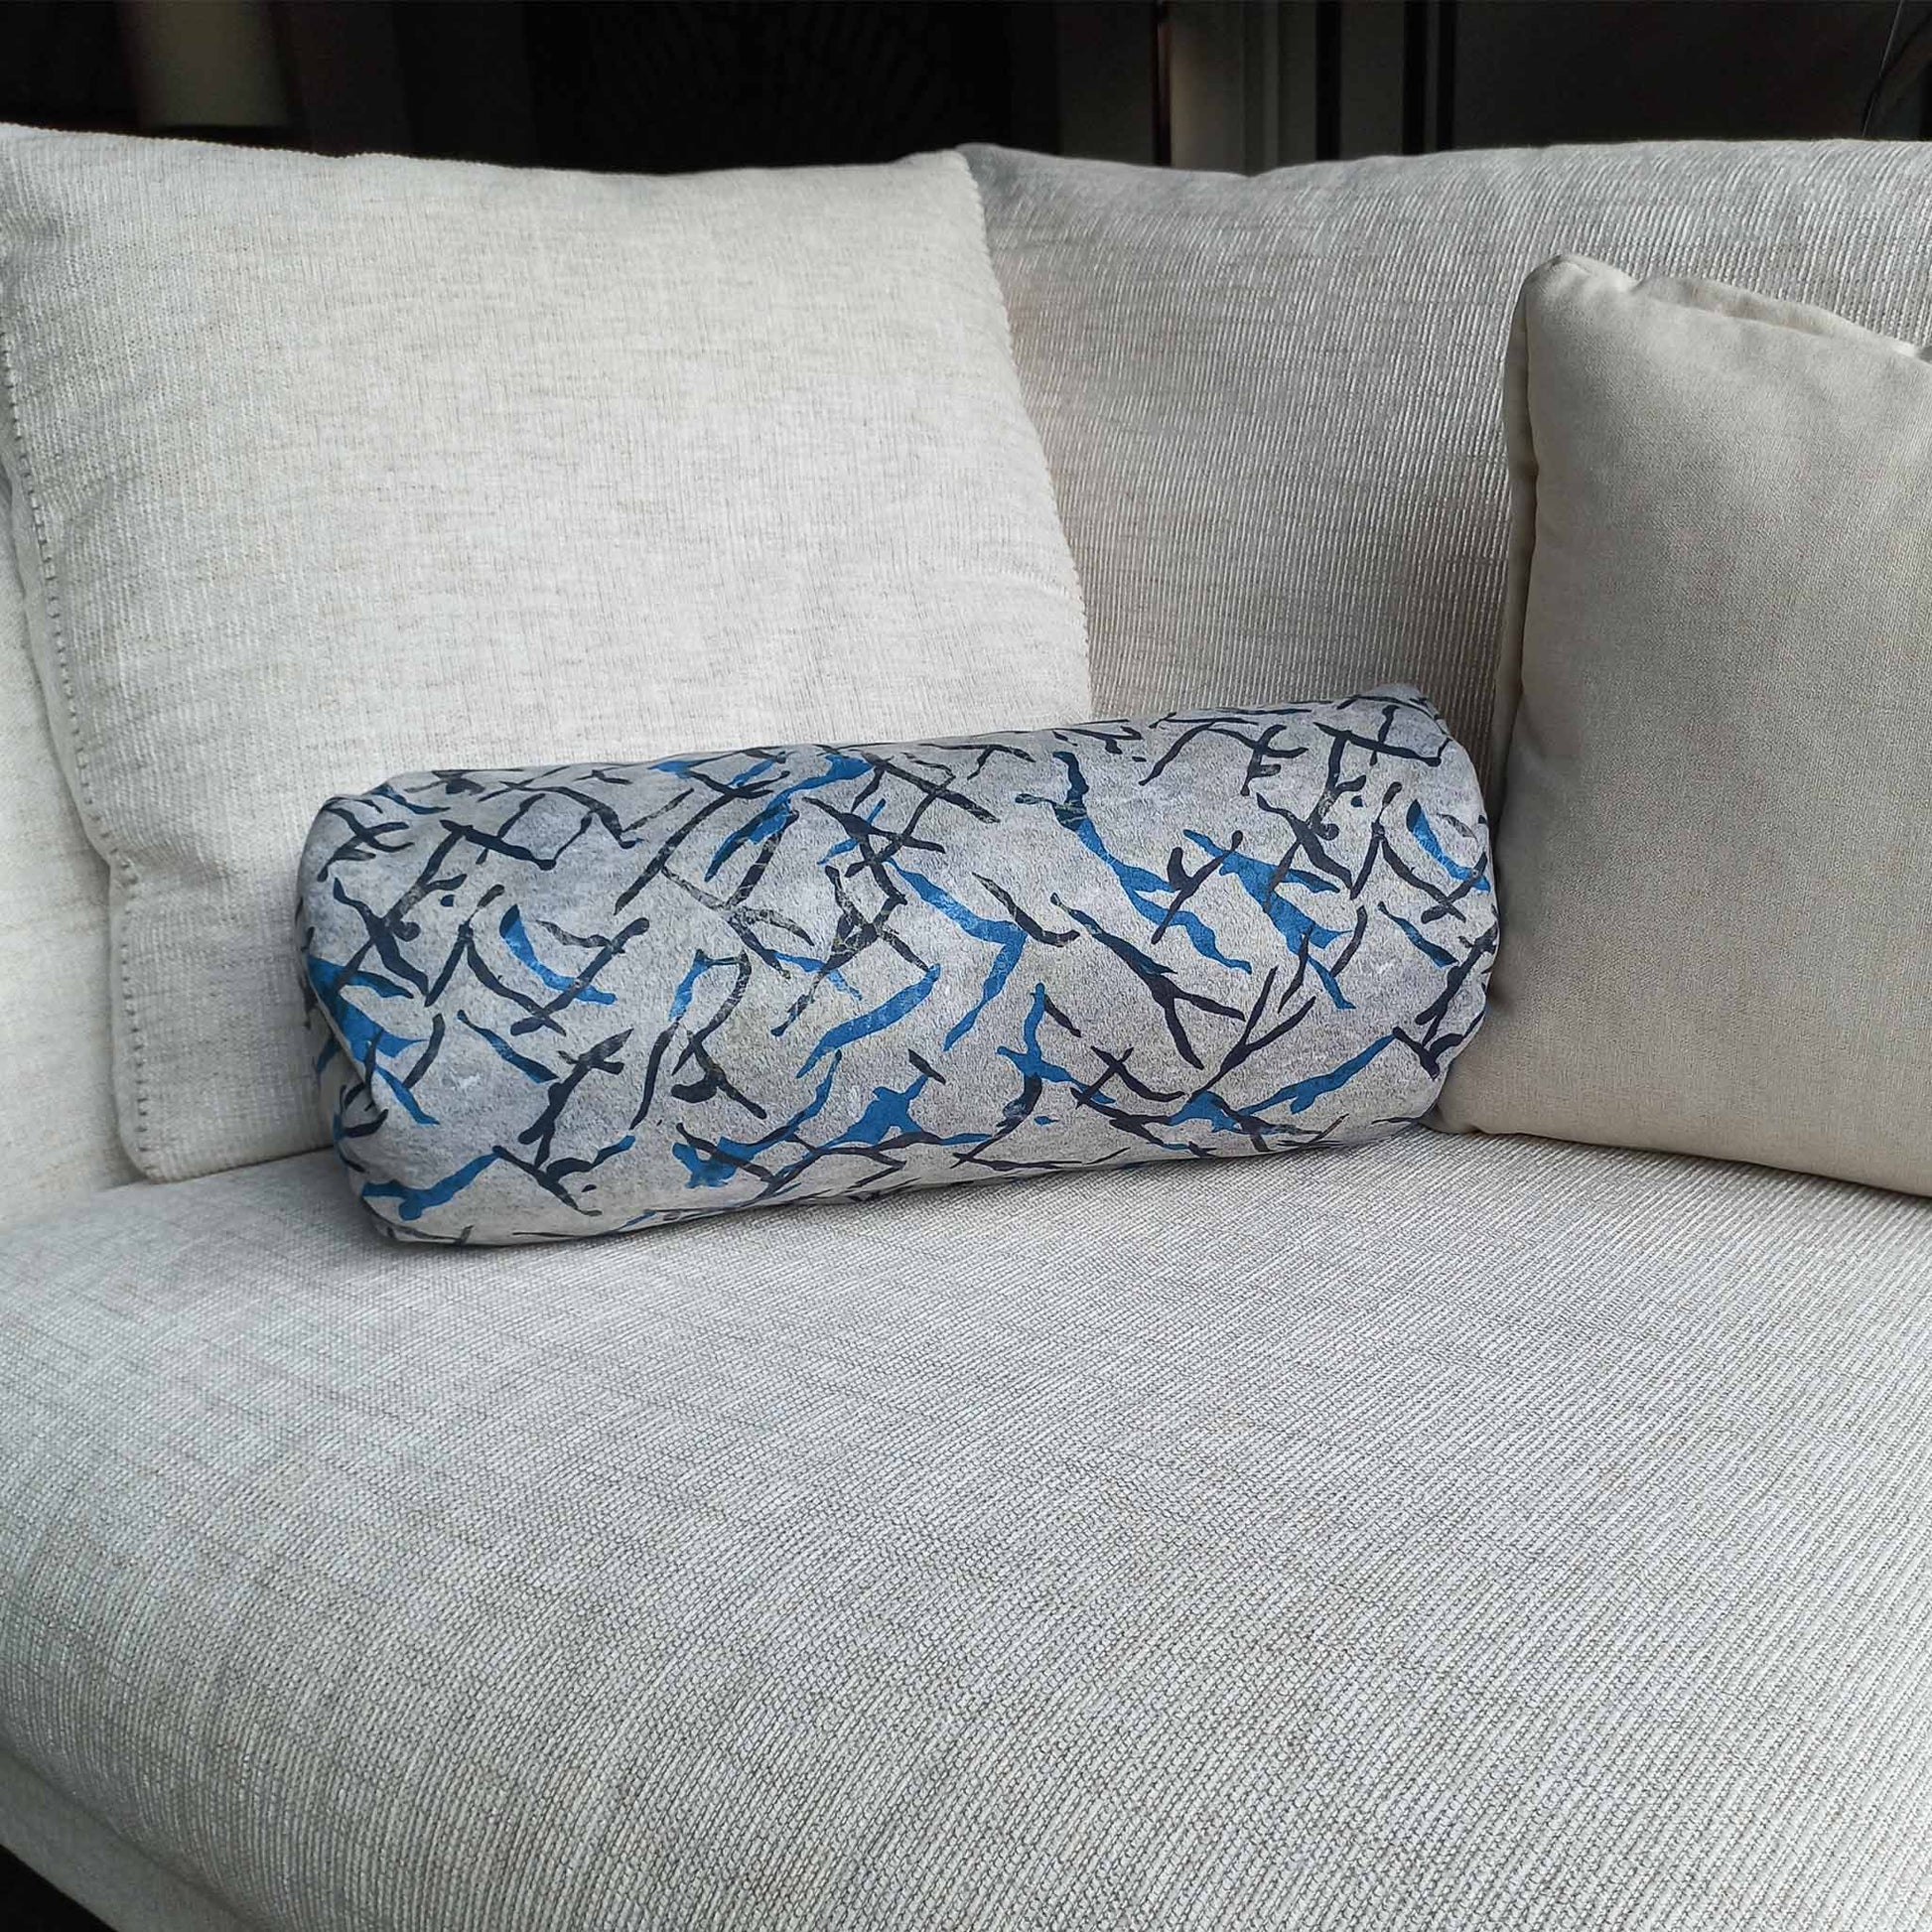 Printed decorative bolster cushion on sofa